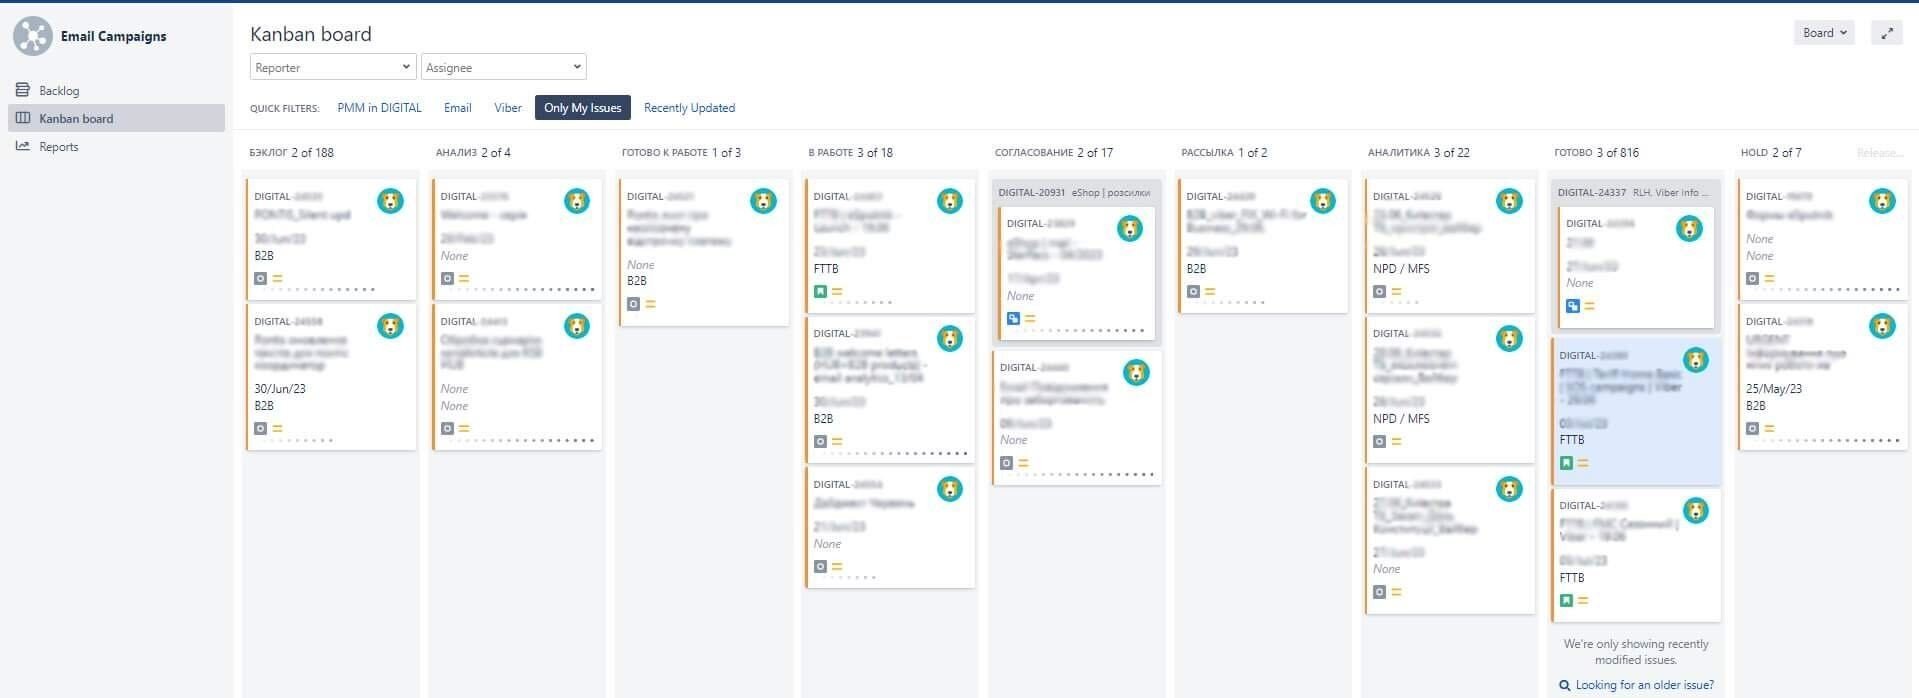 Trello dashboard for email marketing workflow